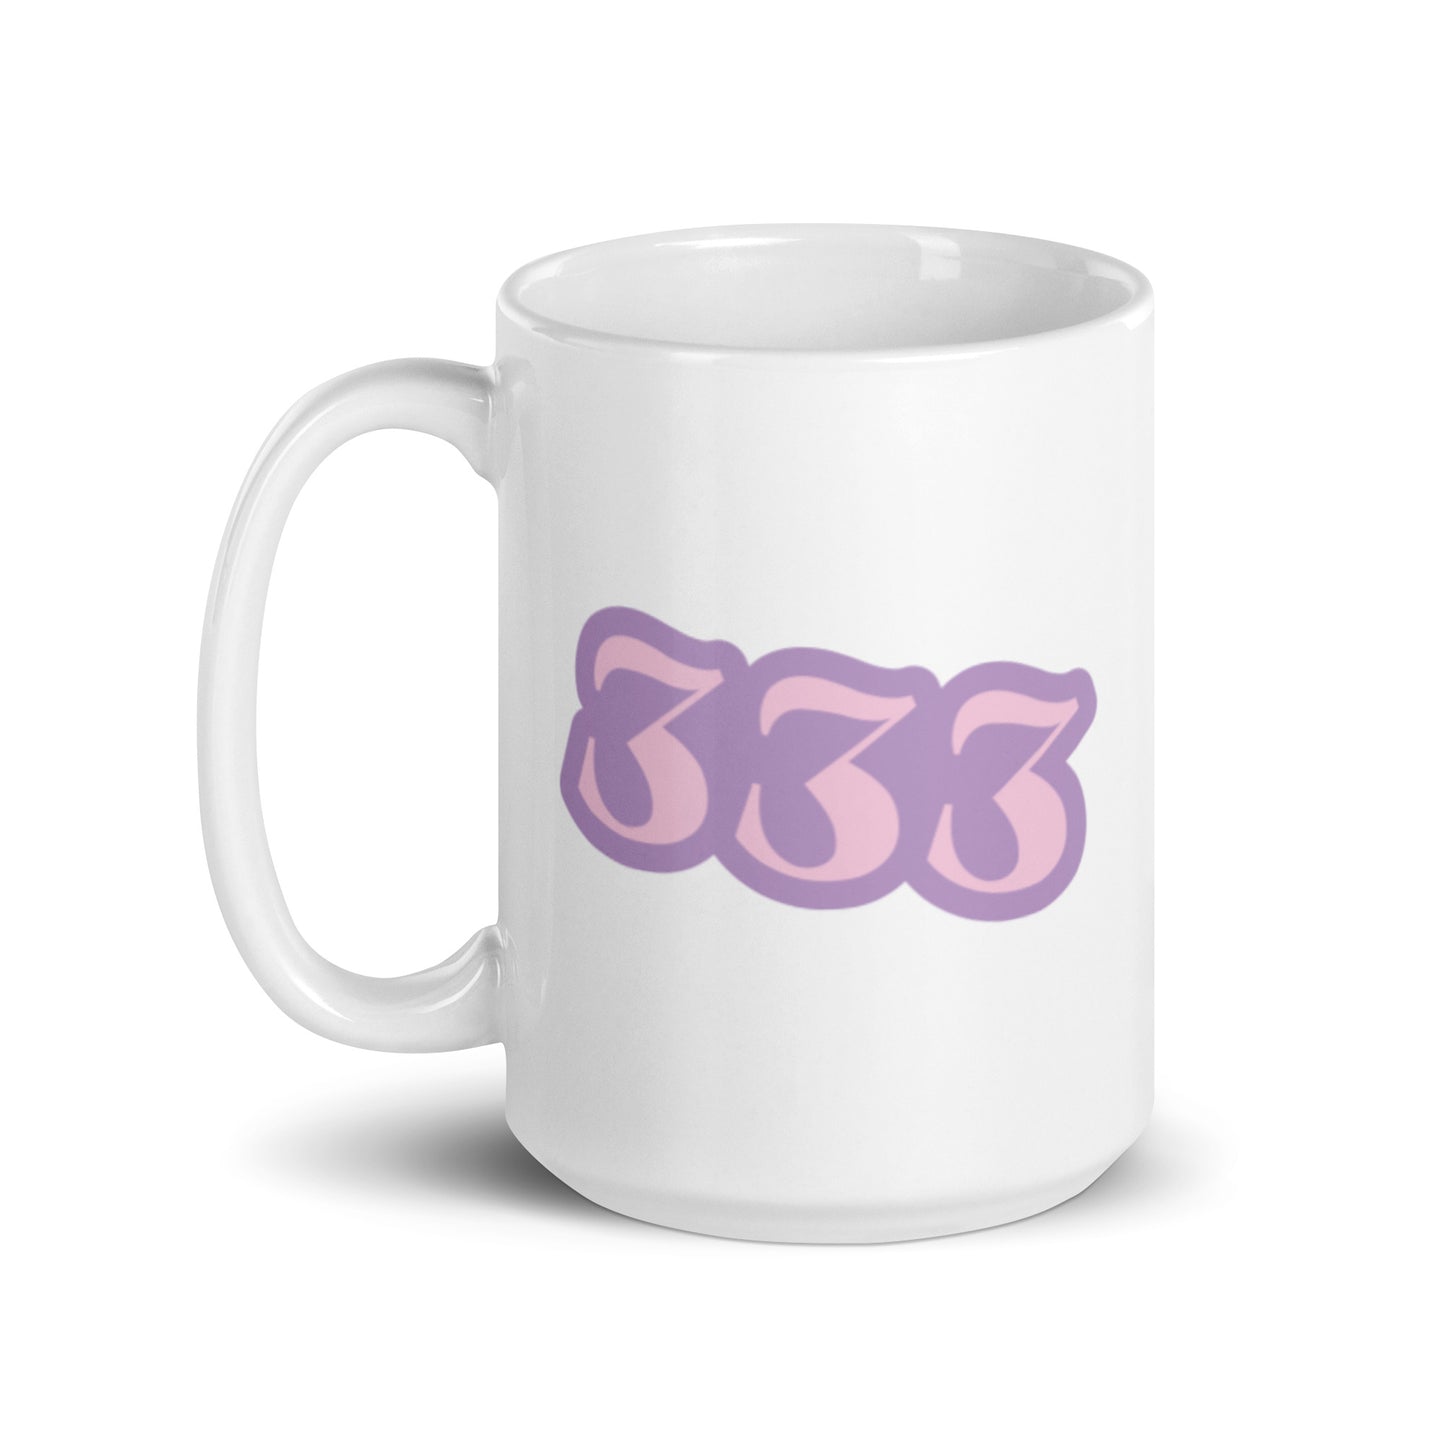 333 Angel Number XL White Glossy Mug (15oz)